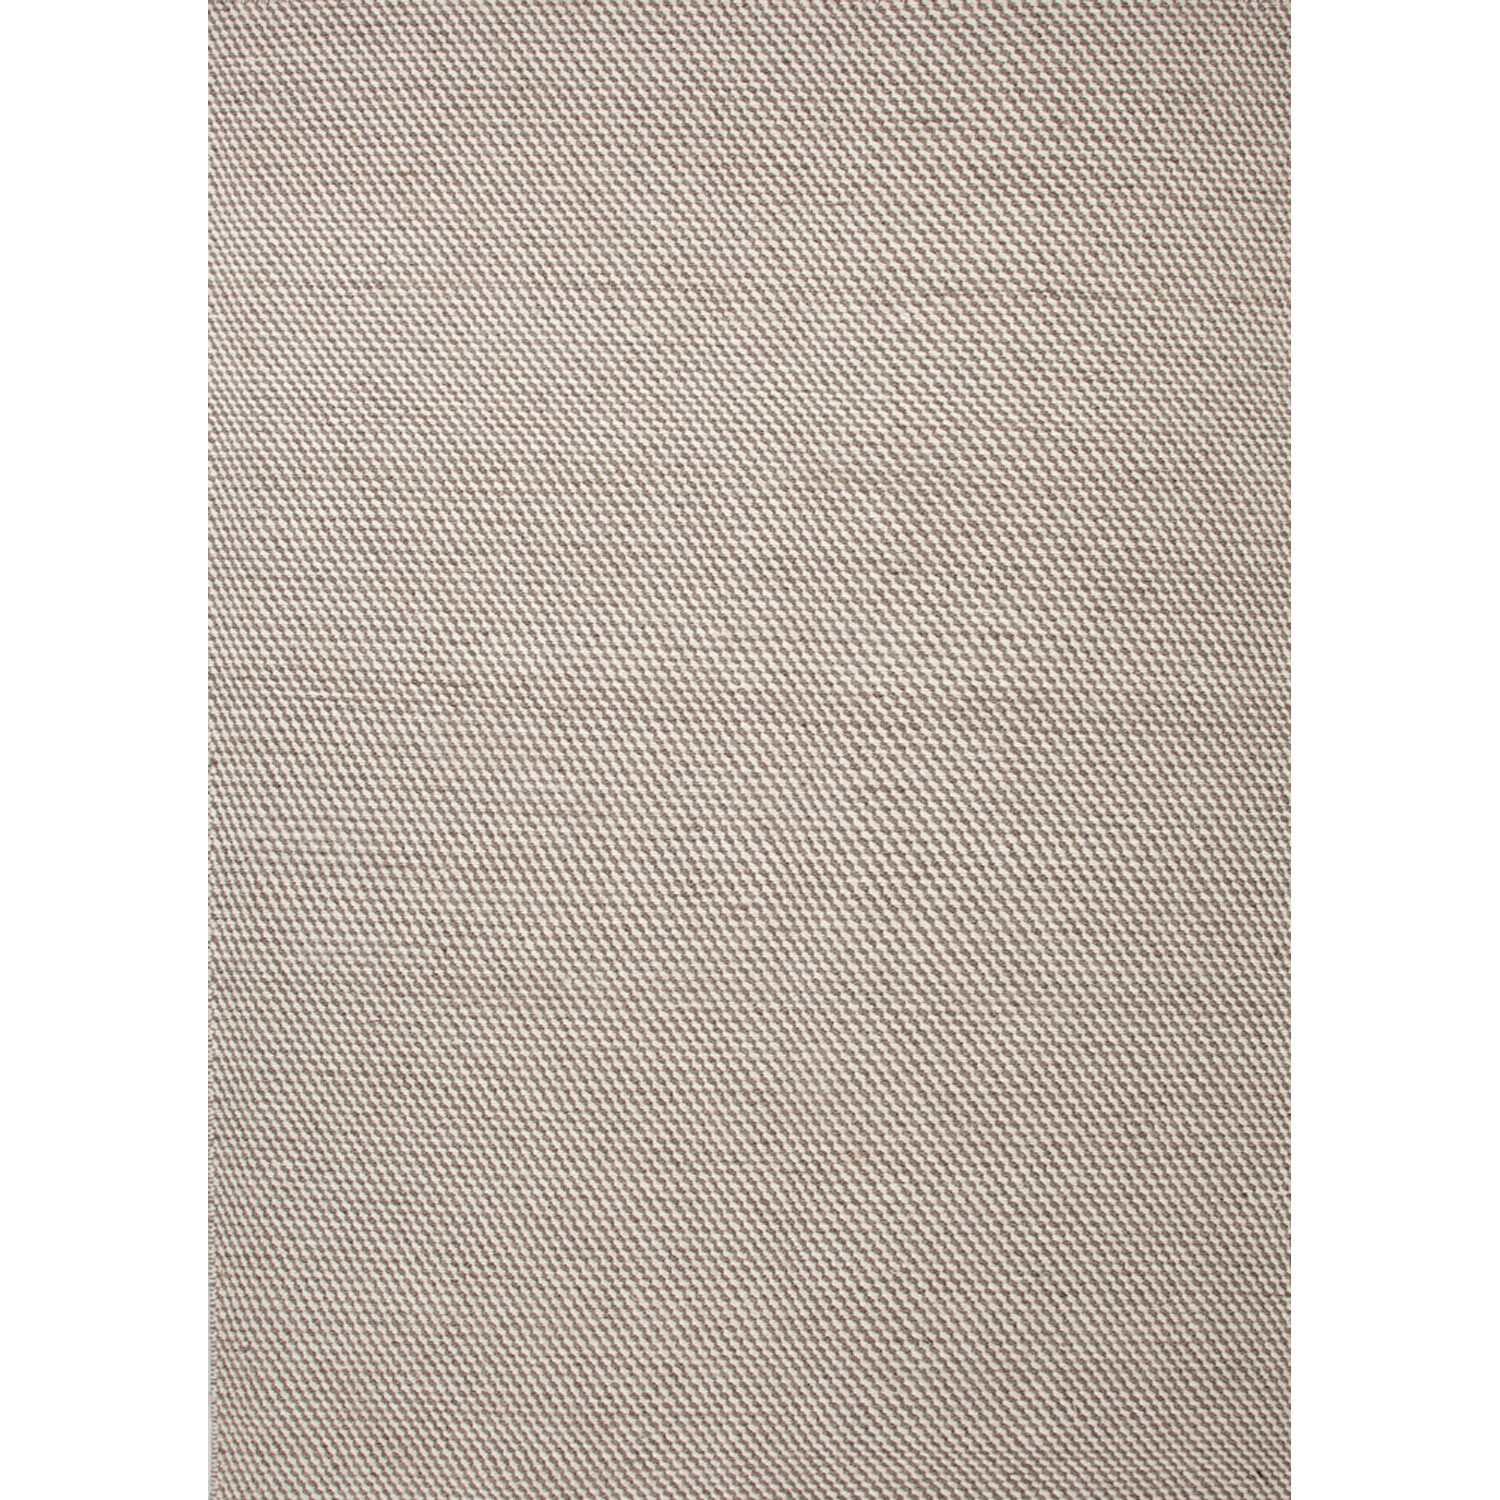 Handmade Flat weave Solid Pattern Gray/ Black Area Rug (5 X 8)